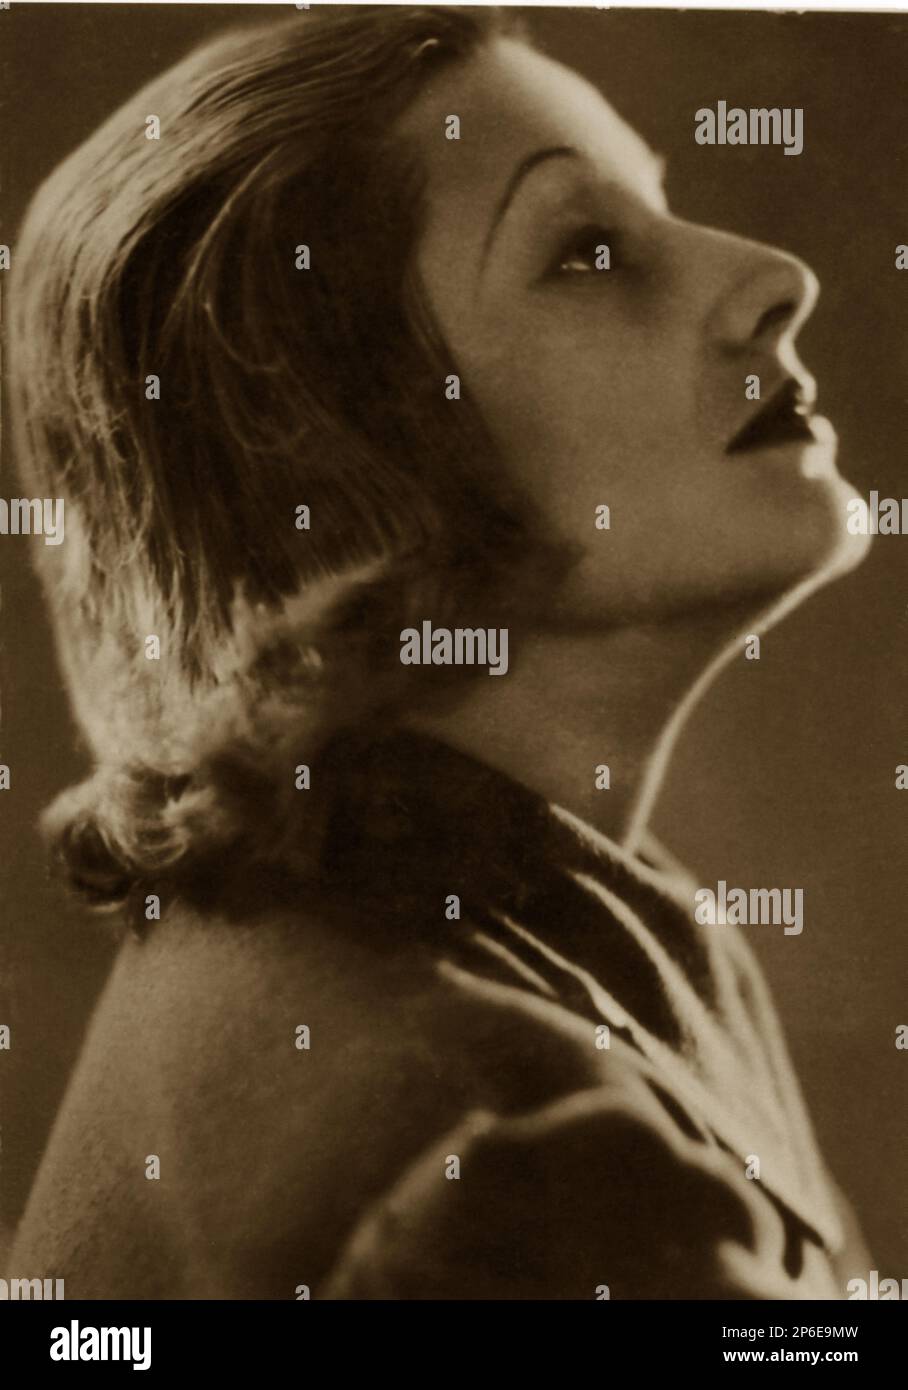 1937 Ca , Pozzuoli , Neapel , ITALIEN : ROMILDA VILLANI , Mutter der Filmschauspielerin SOPHIA LOREN ( geboren Sofia Scicolone , Roma 1934 ) , eine Greta Garbo-Optik - KINO - profilo - Profil - Porträt - Rituto --- Archivio GBB Stockfoto